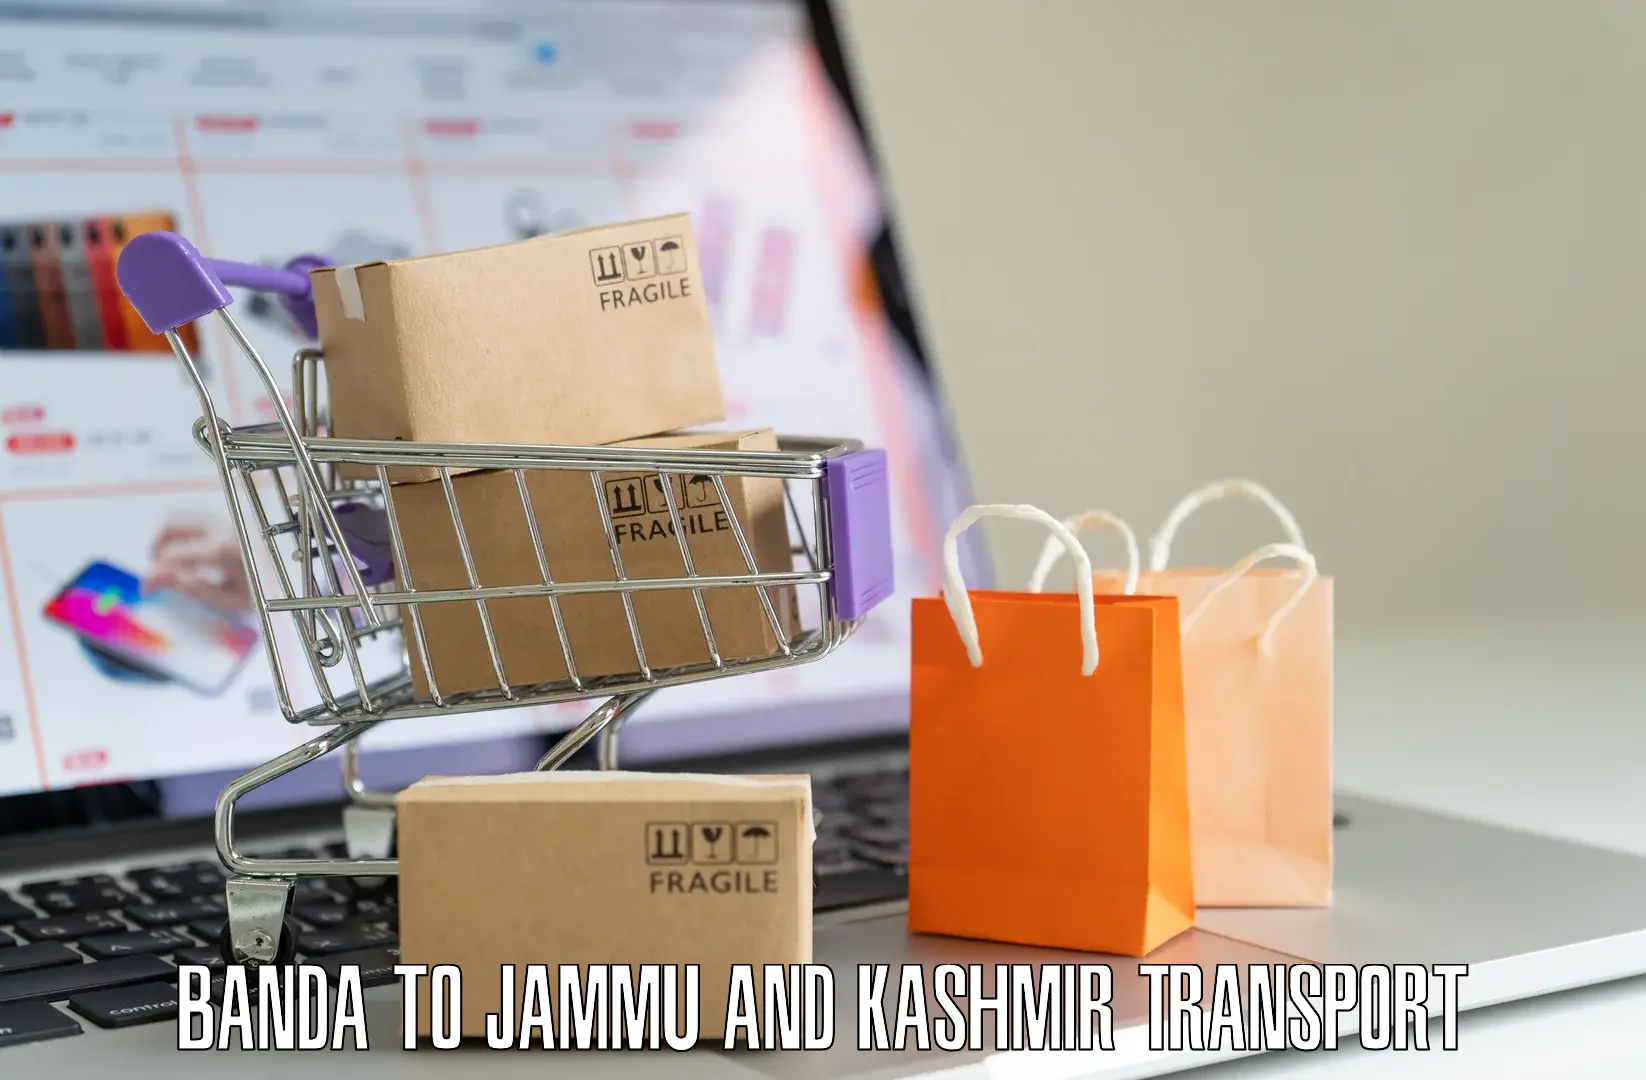 Daily transport service Banda to Jammu and Kashmir